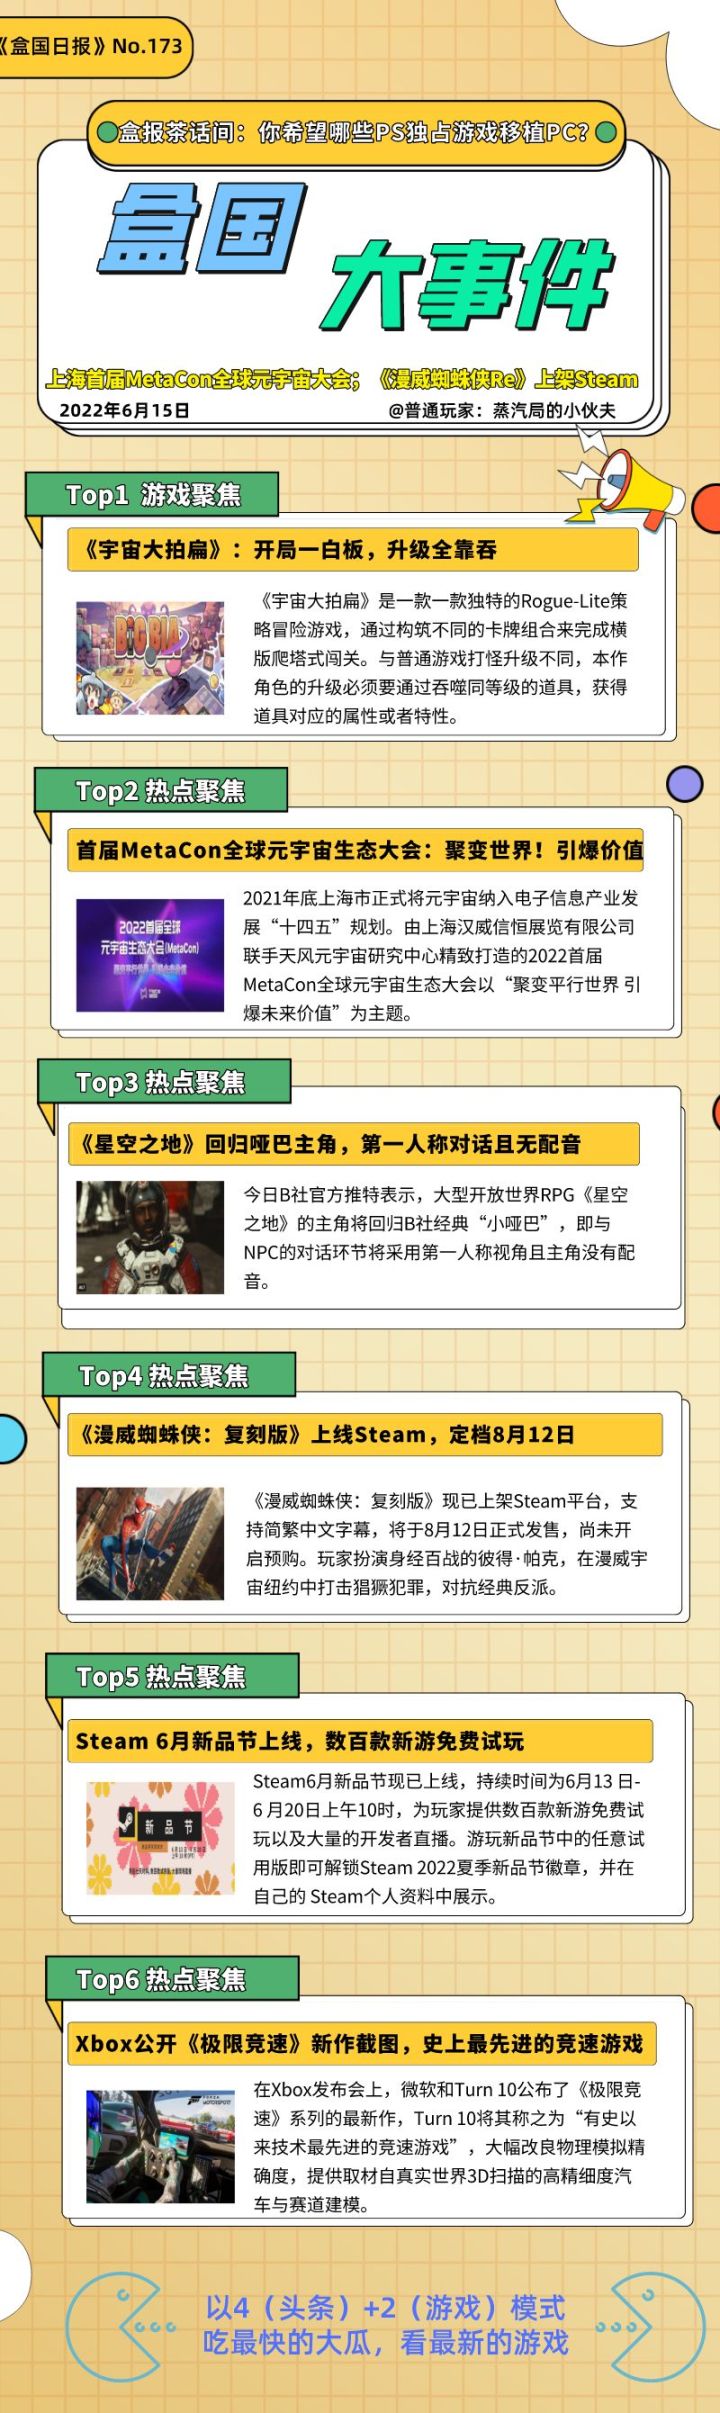 【PC游戏】盒国日报|上海首届MetaCon全球元宇宙大会；《漫威蜘蛛侠Re》上架Steam-第0张